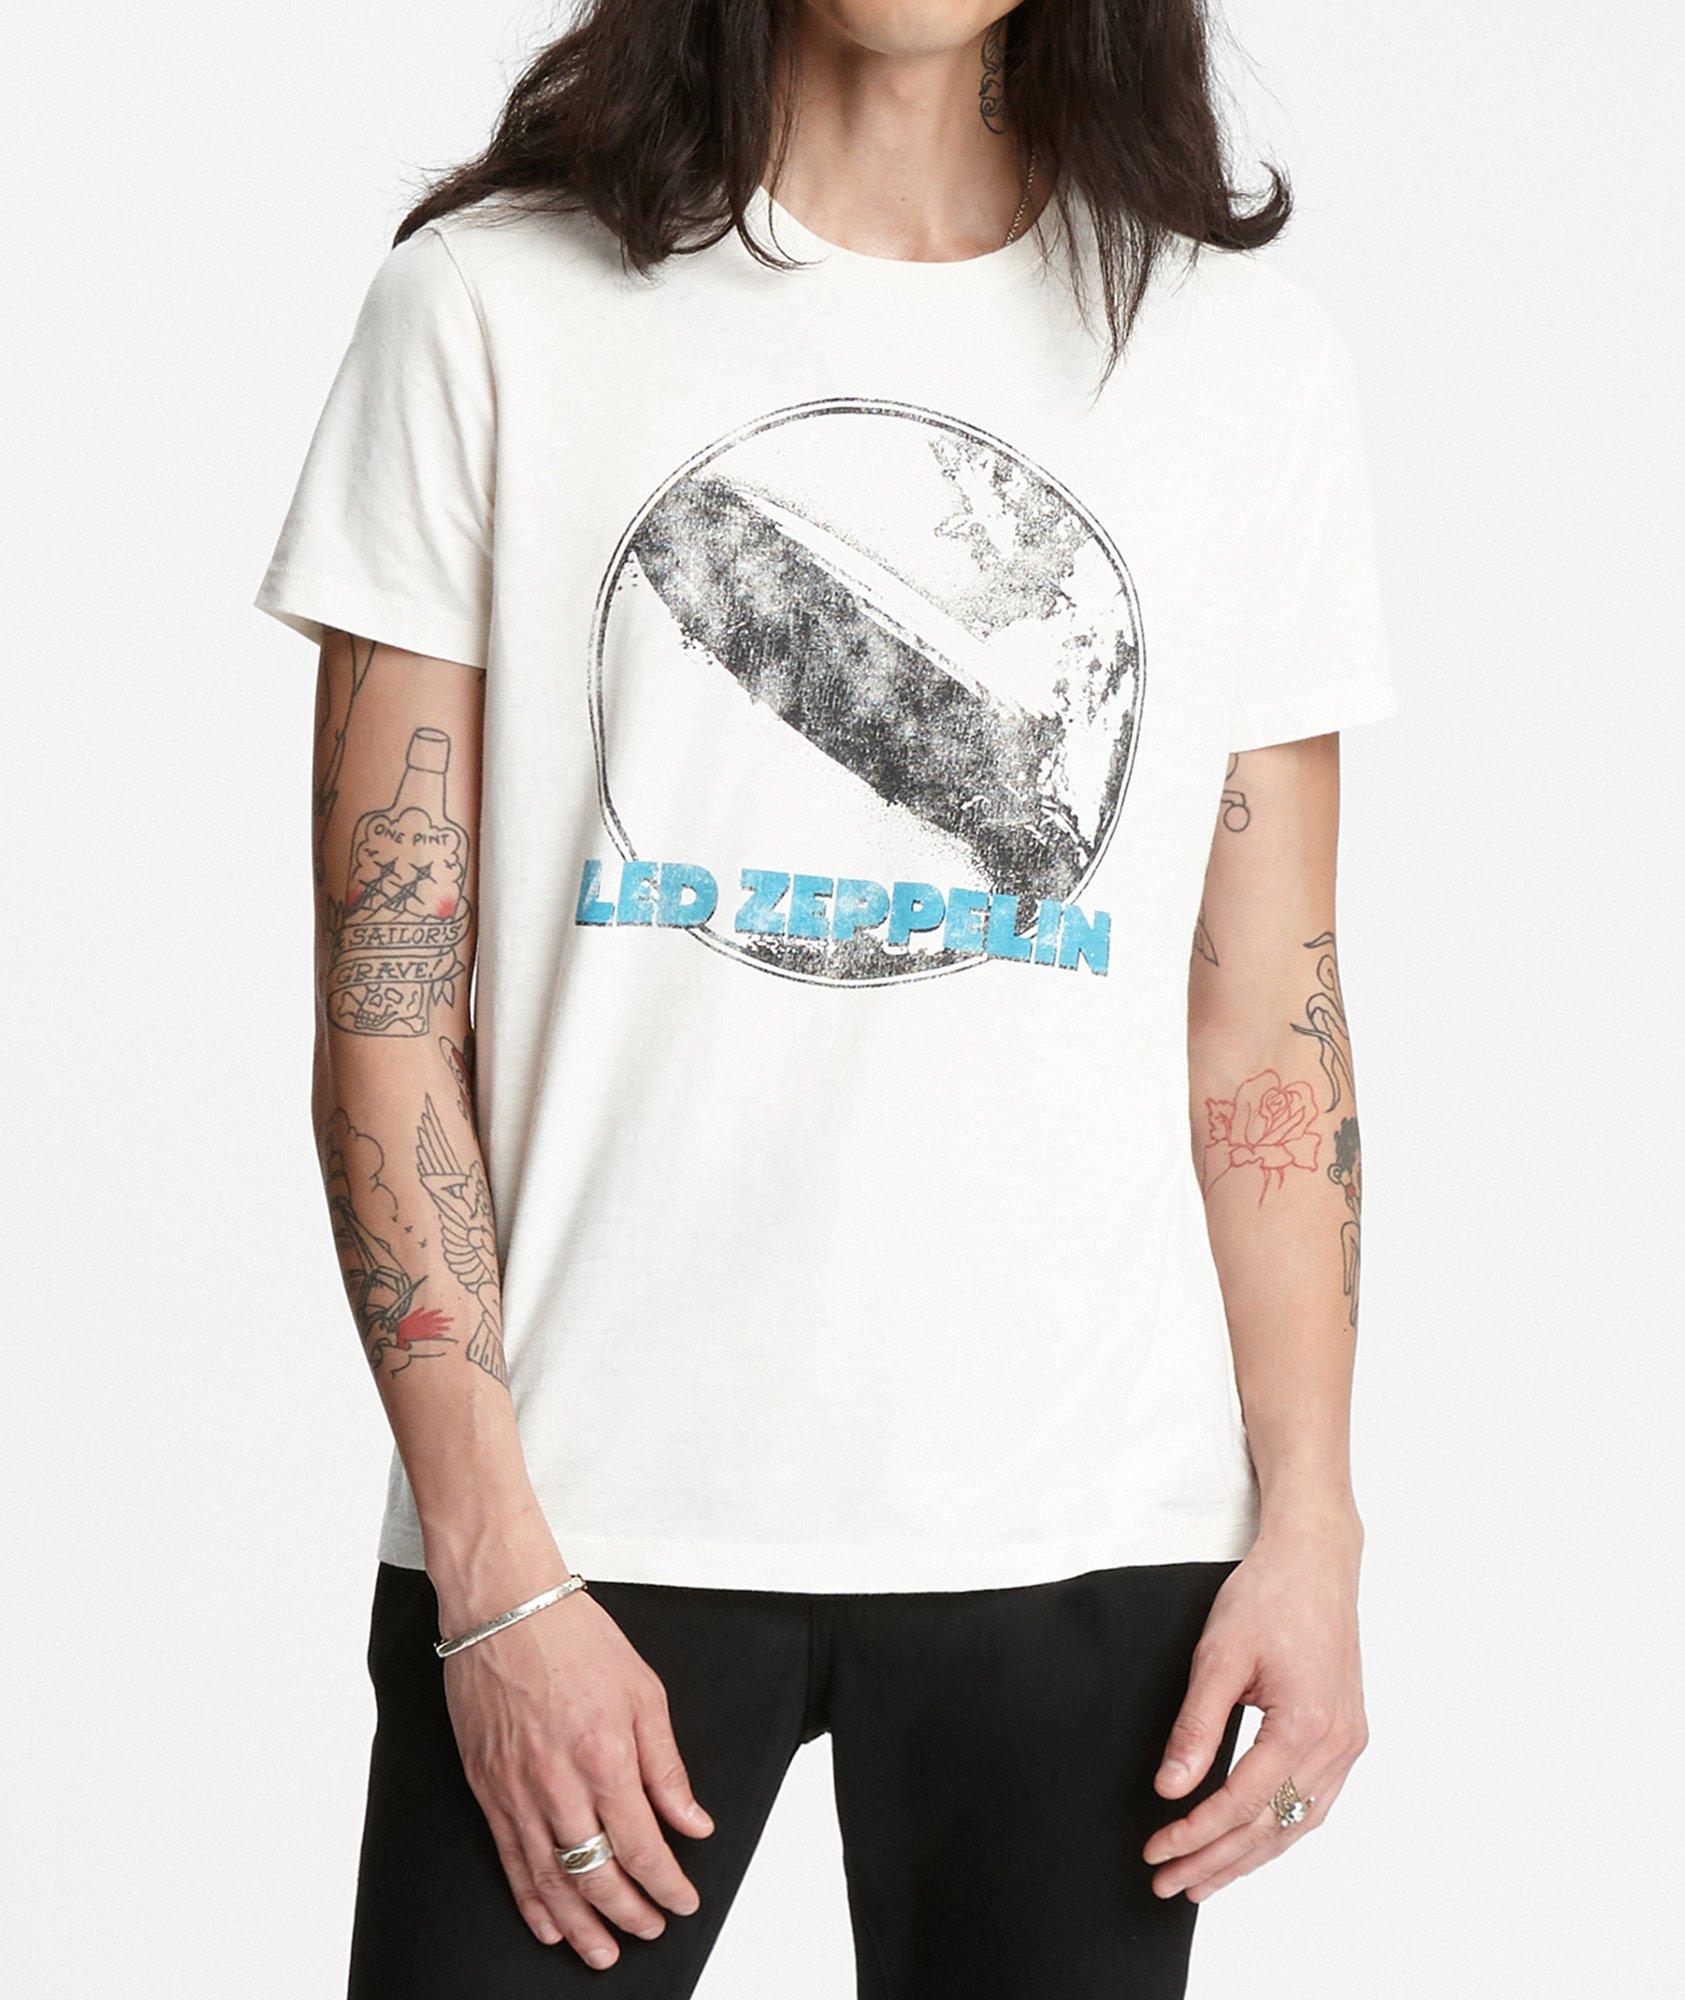 Led Zeppelin Debut Album T-Shirt image 0